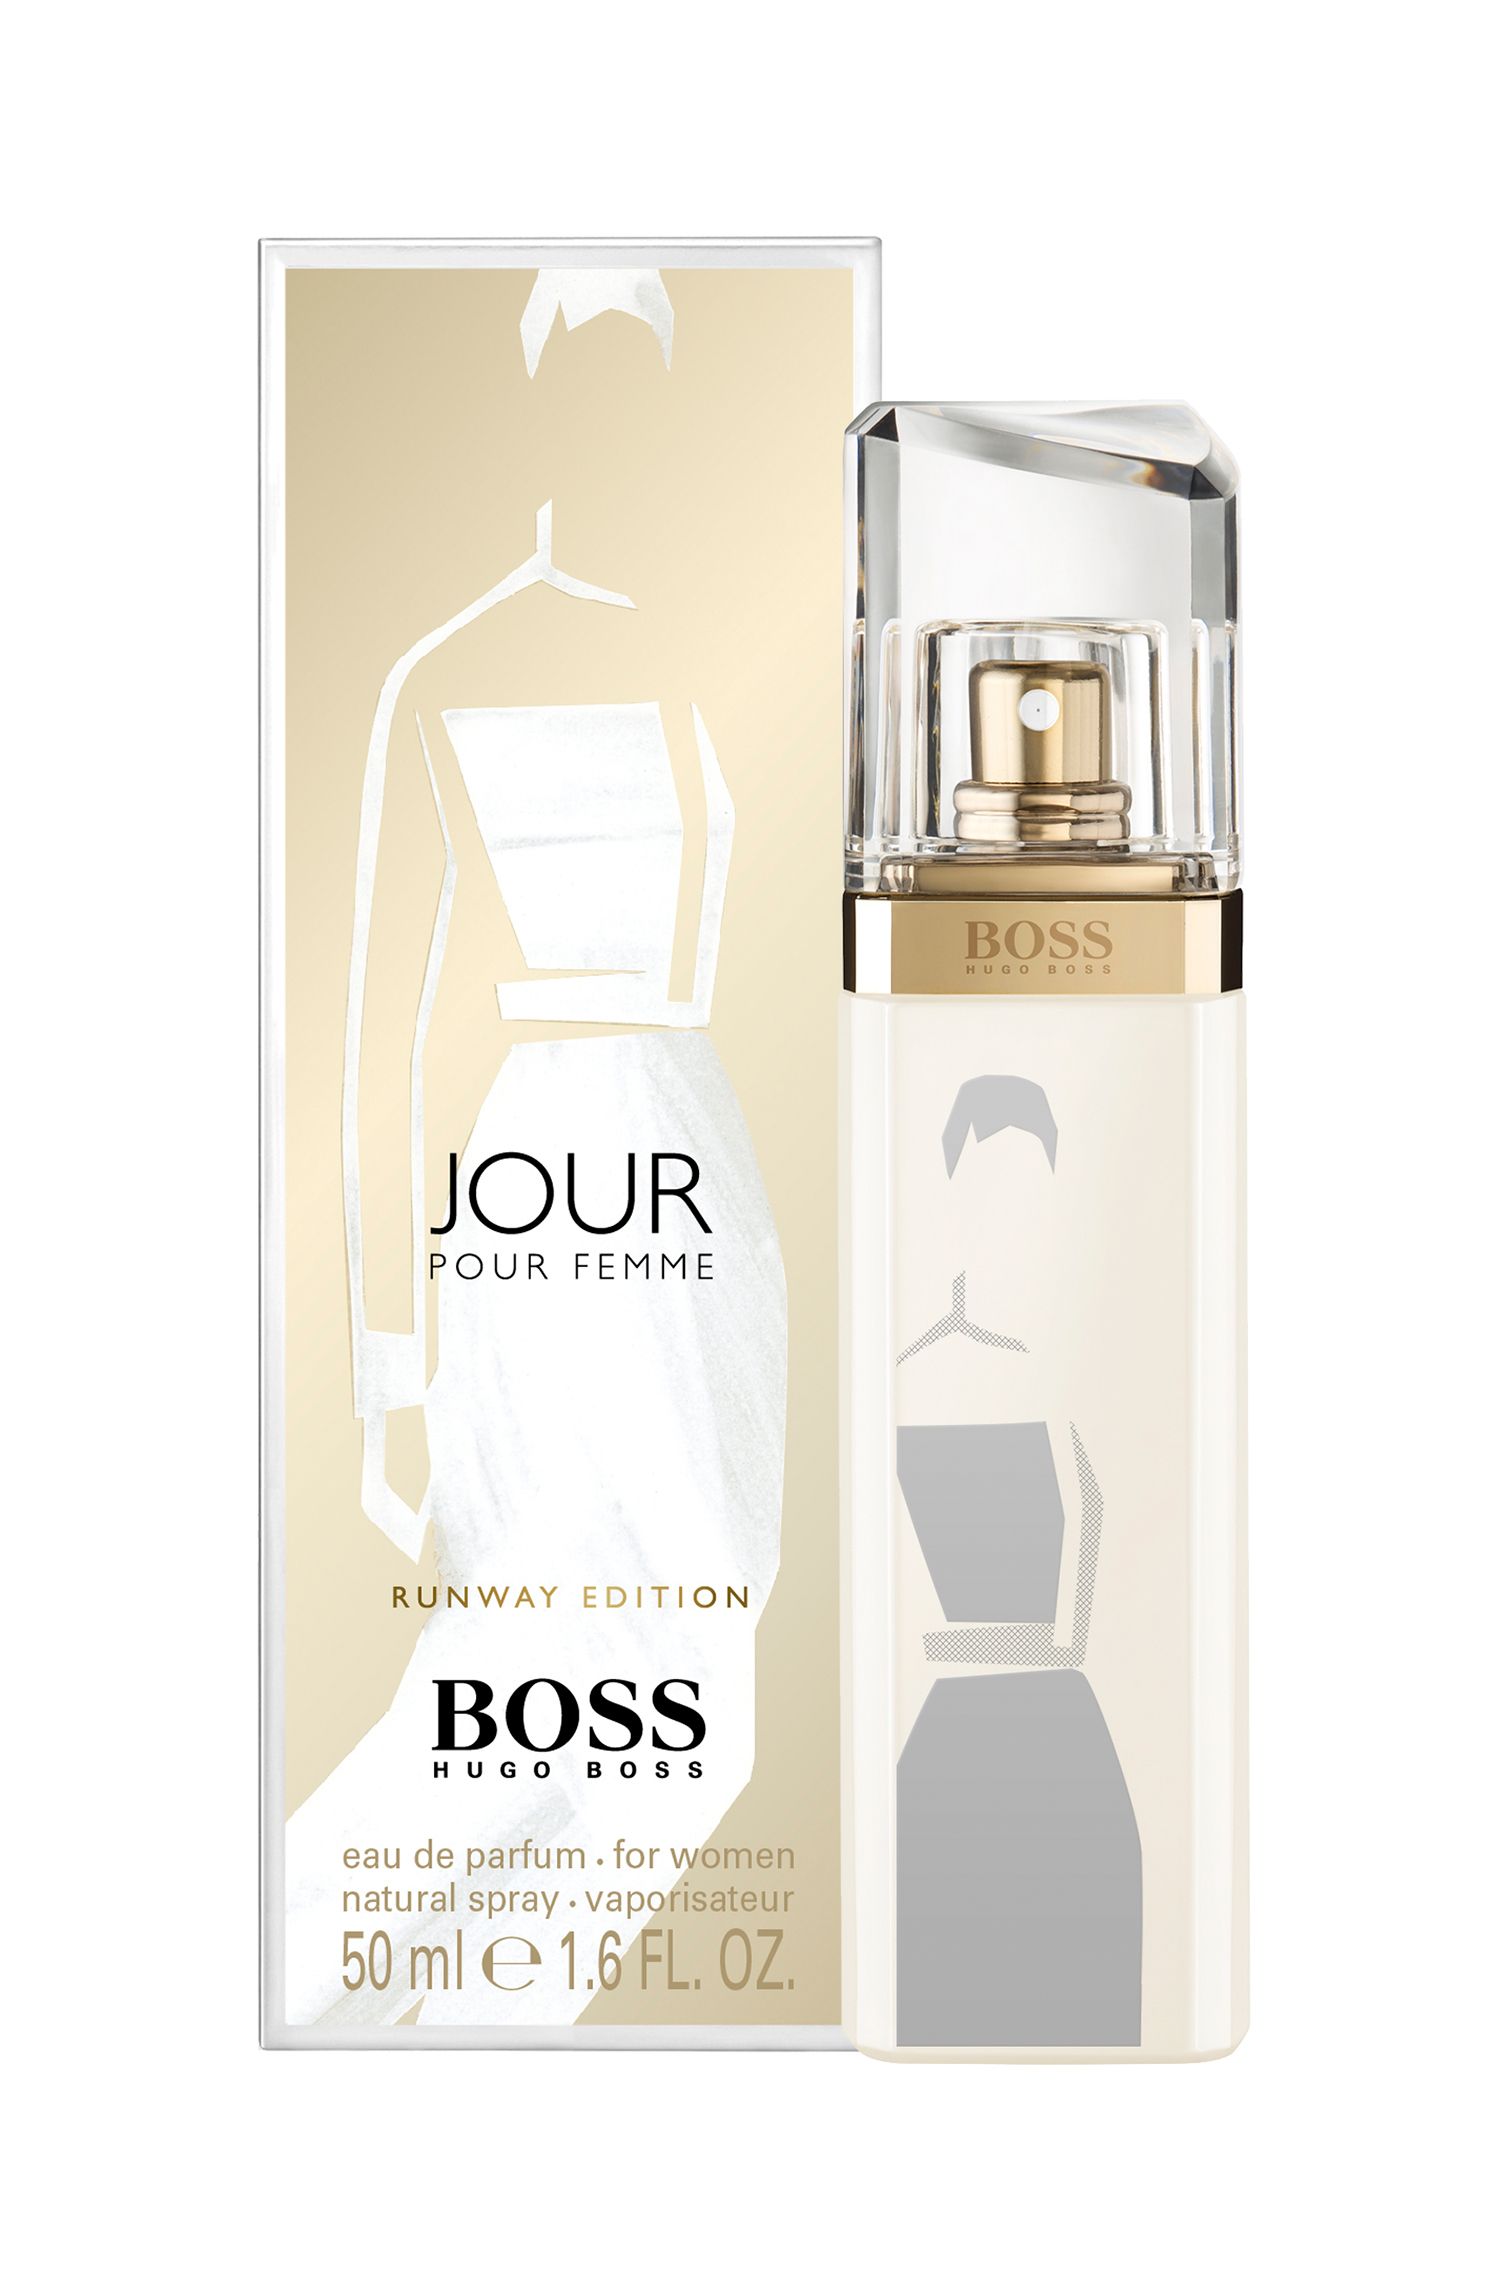 Boss Jour Pour Femme Runway Edition 